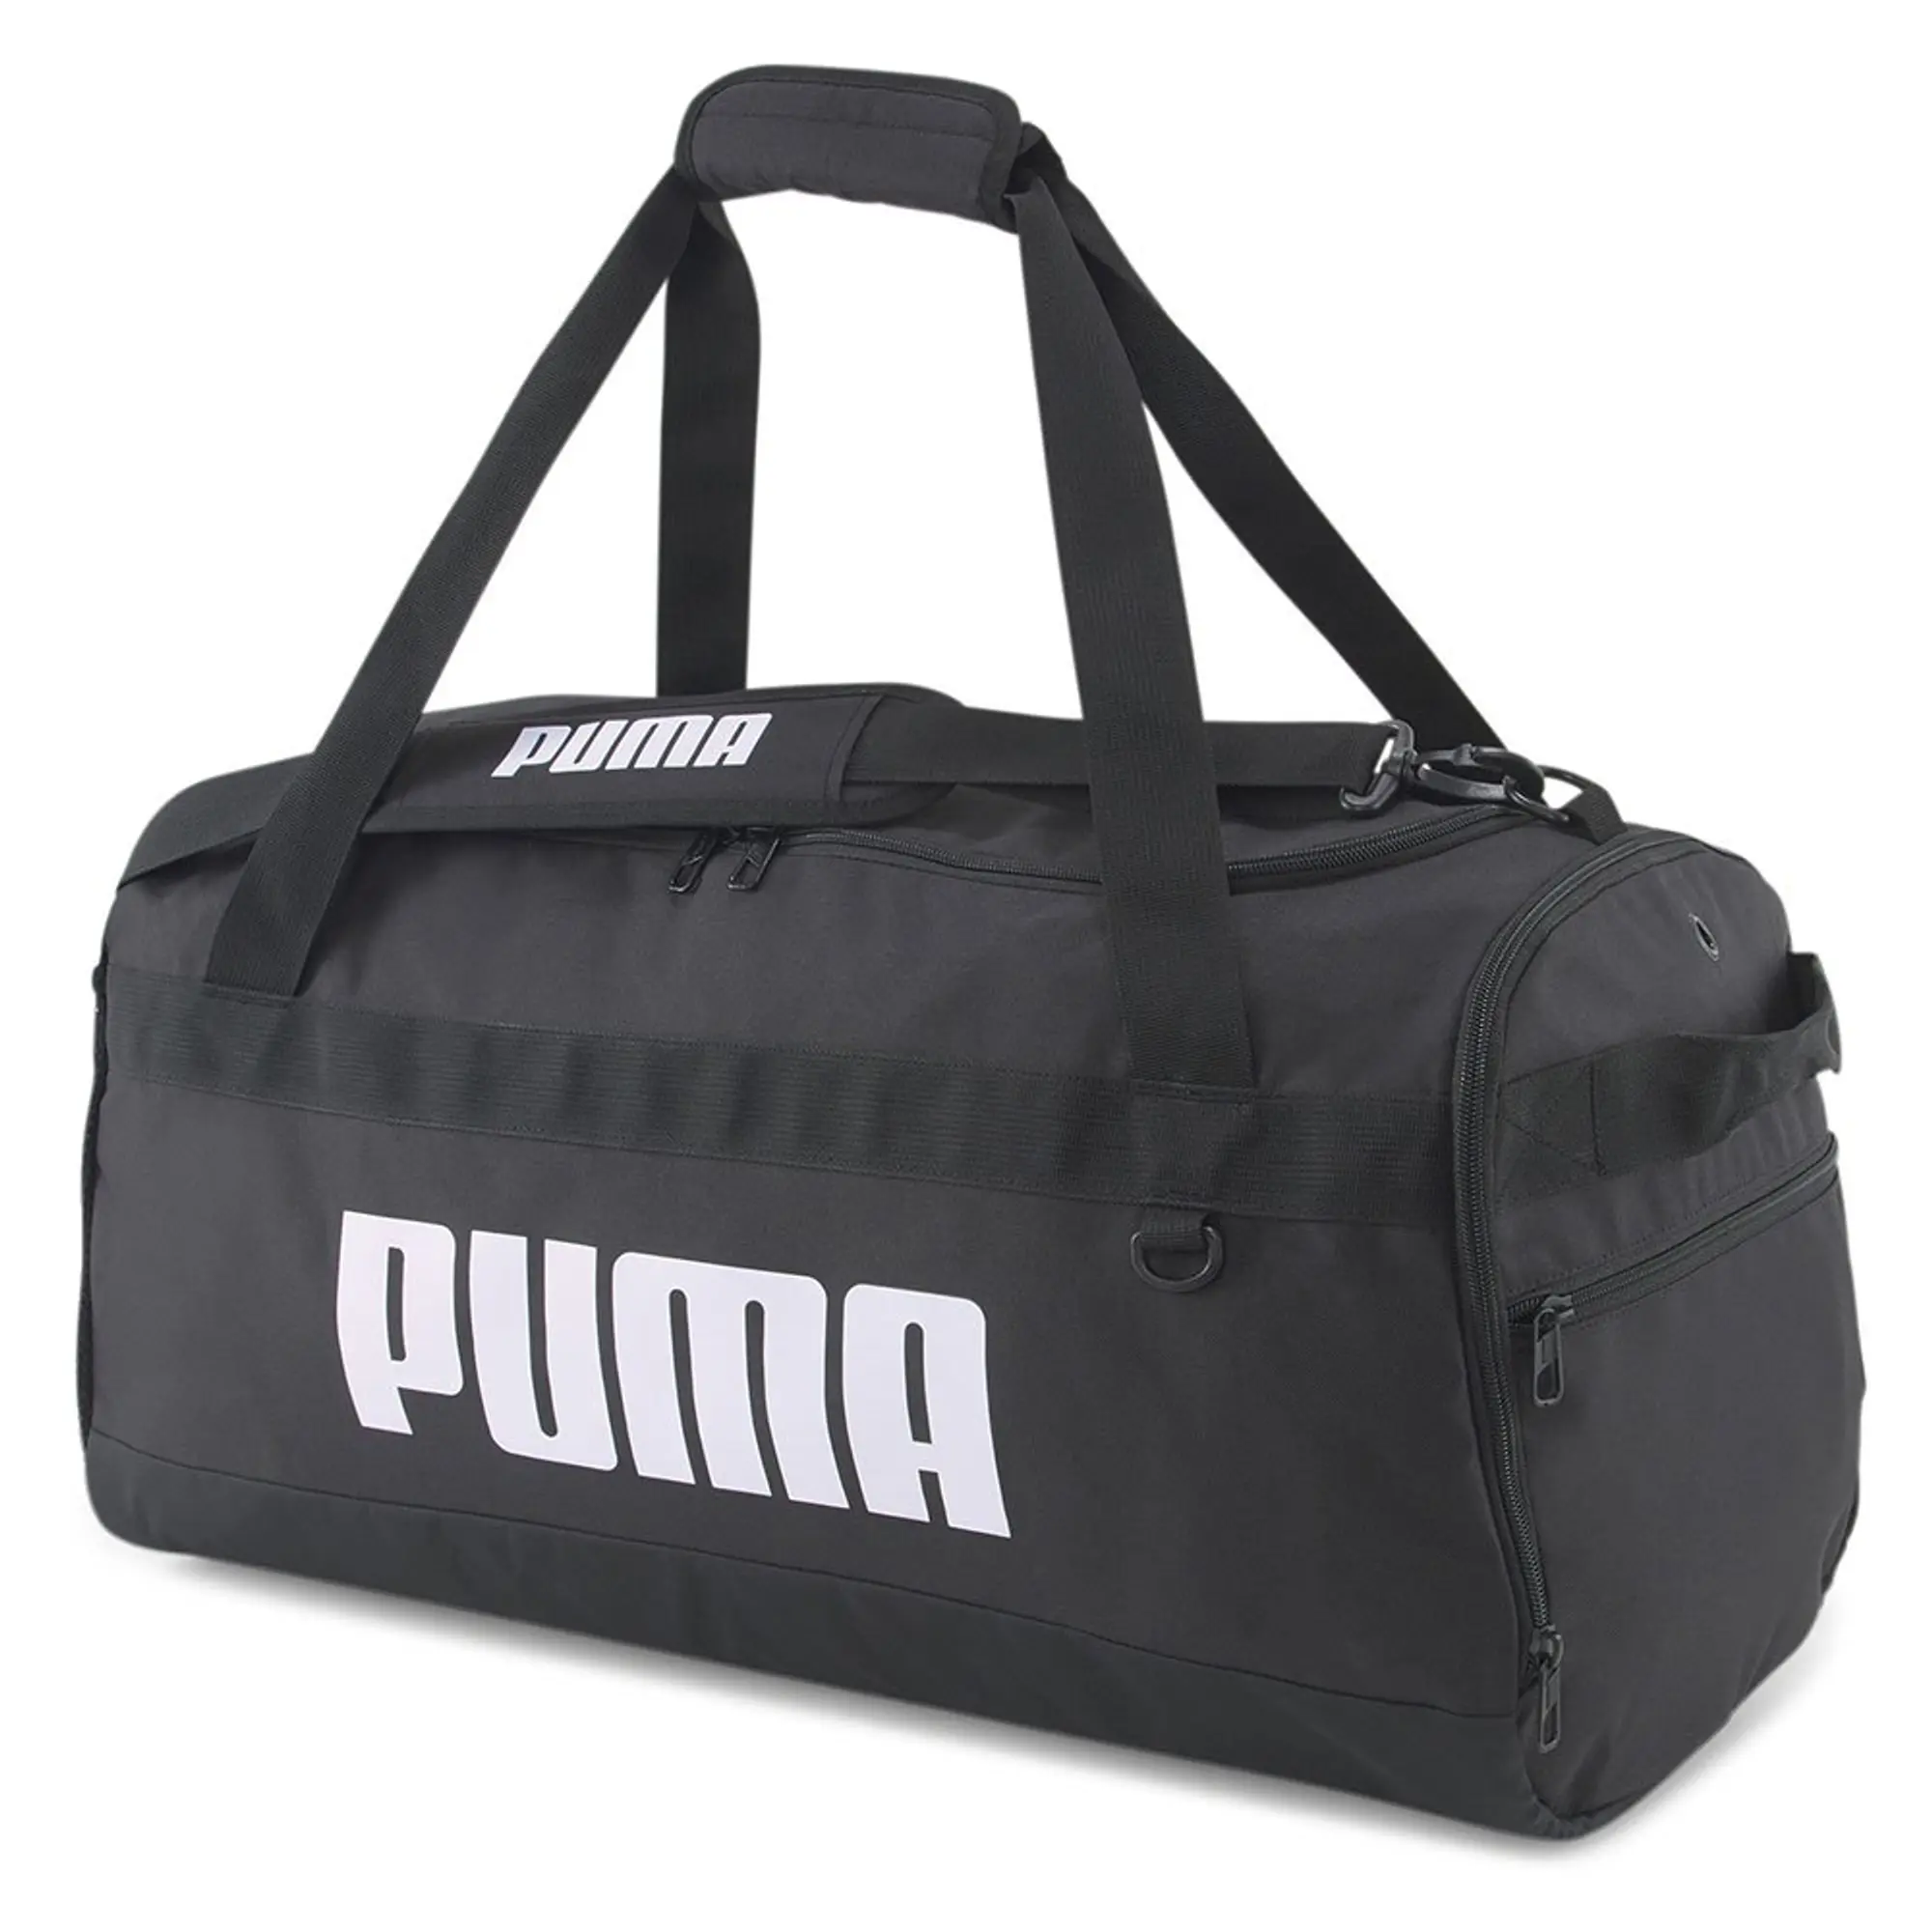 PUMA Challenger M Duffle Bag, Black